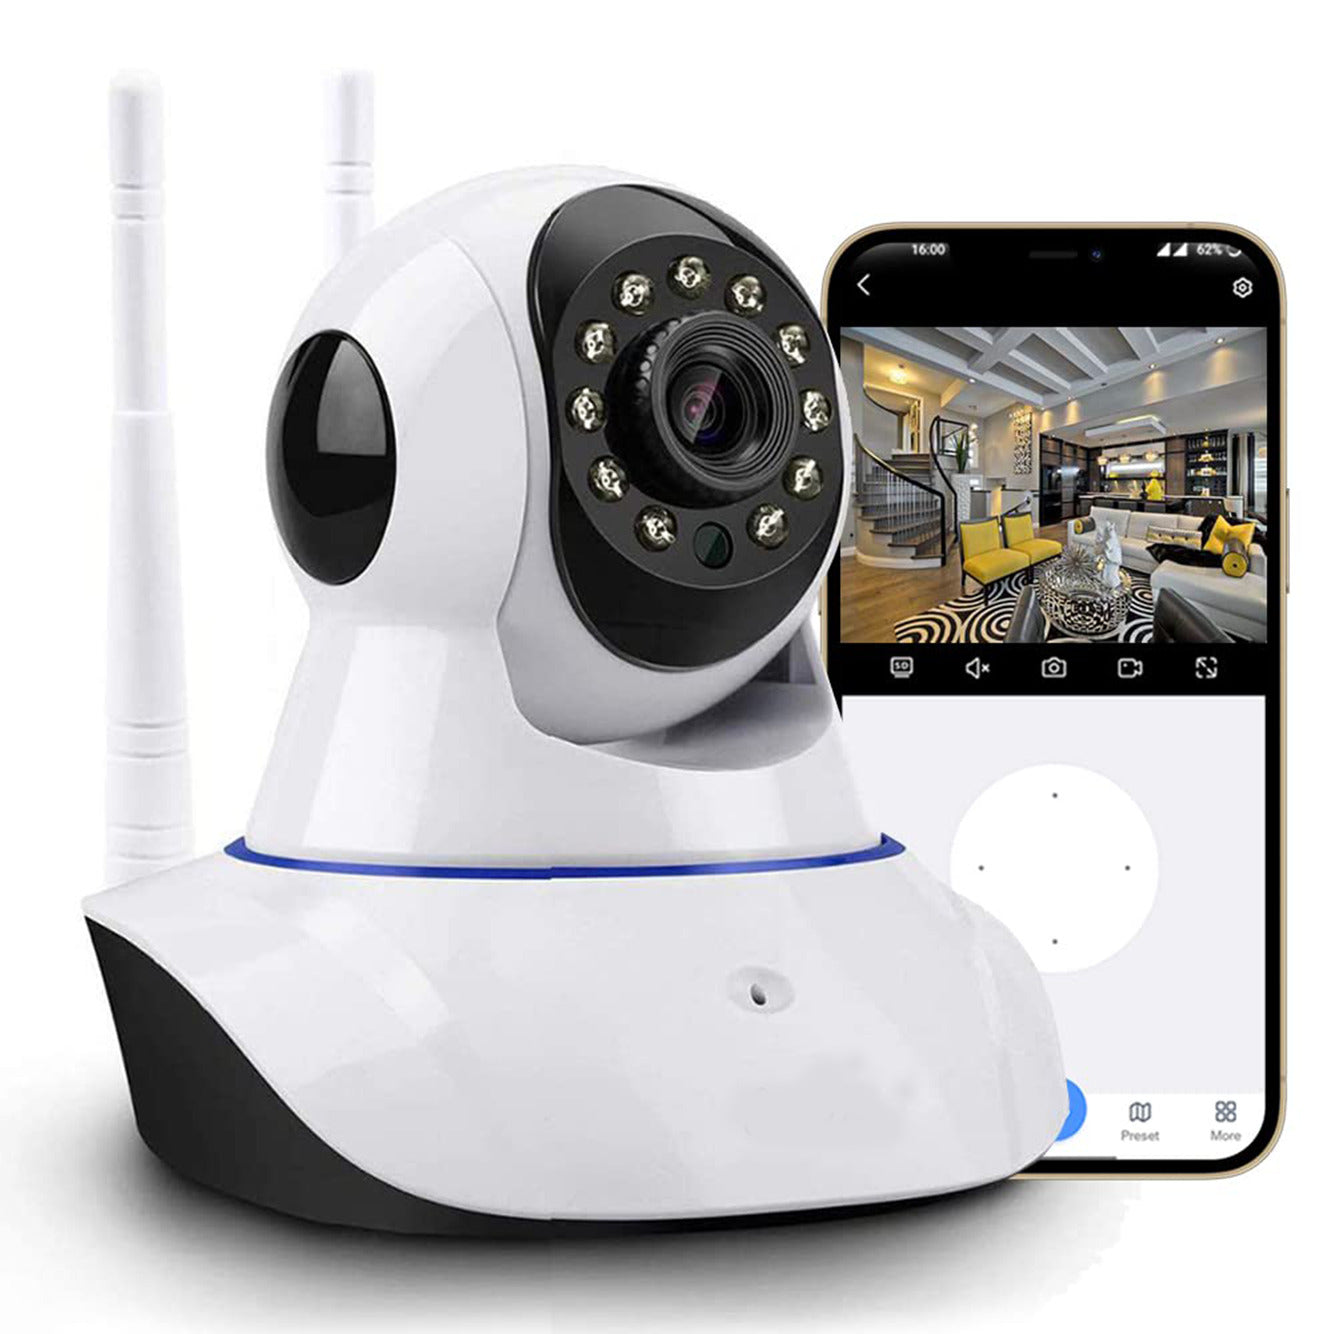 Ibotz {Upgraded} Double Antenna l HD Smart WiFi Wireless IP CCTV Security Camera | Night Vision | 2-Way Audio | Support 64 GB Micro SD Card Slot(DA-Camera)